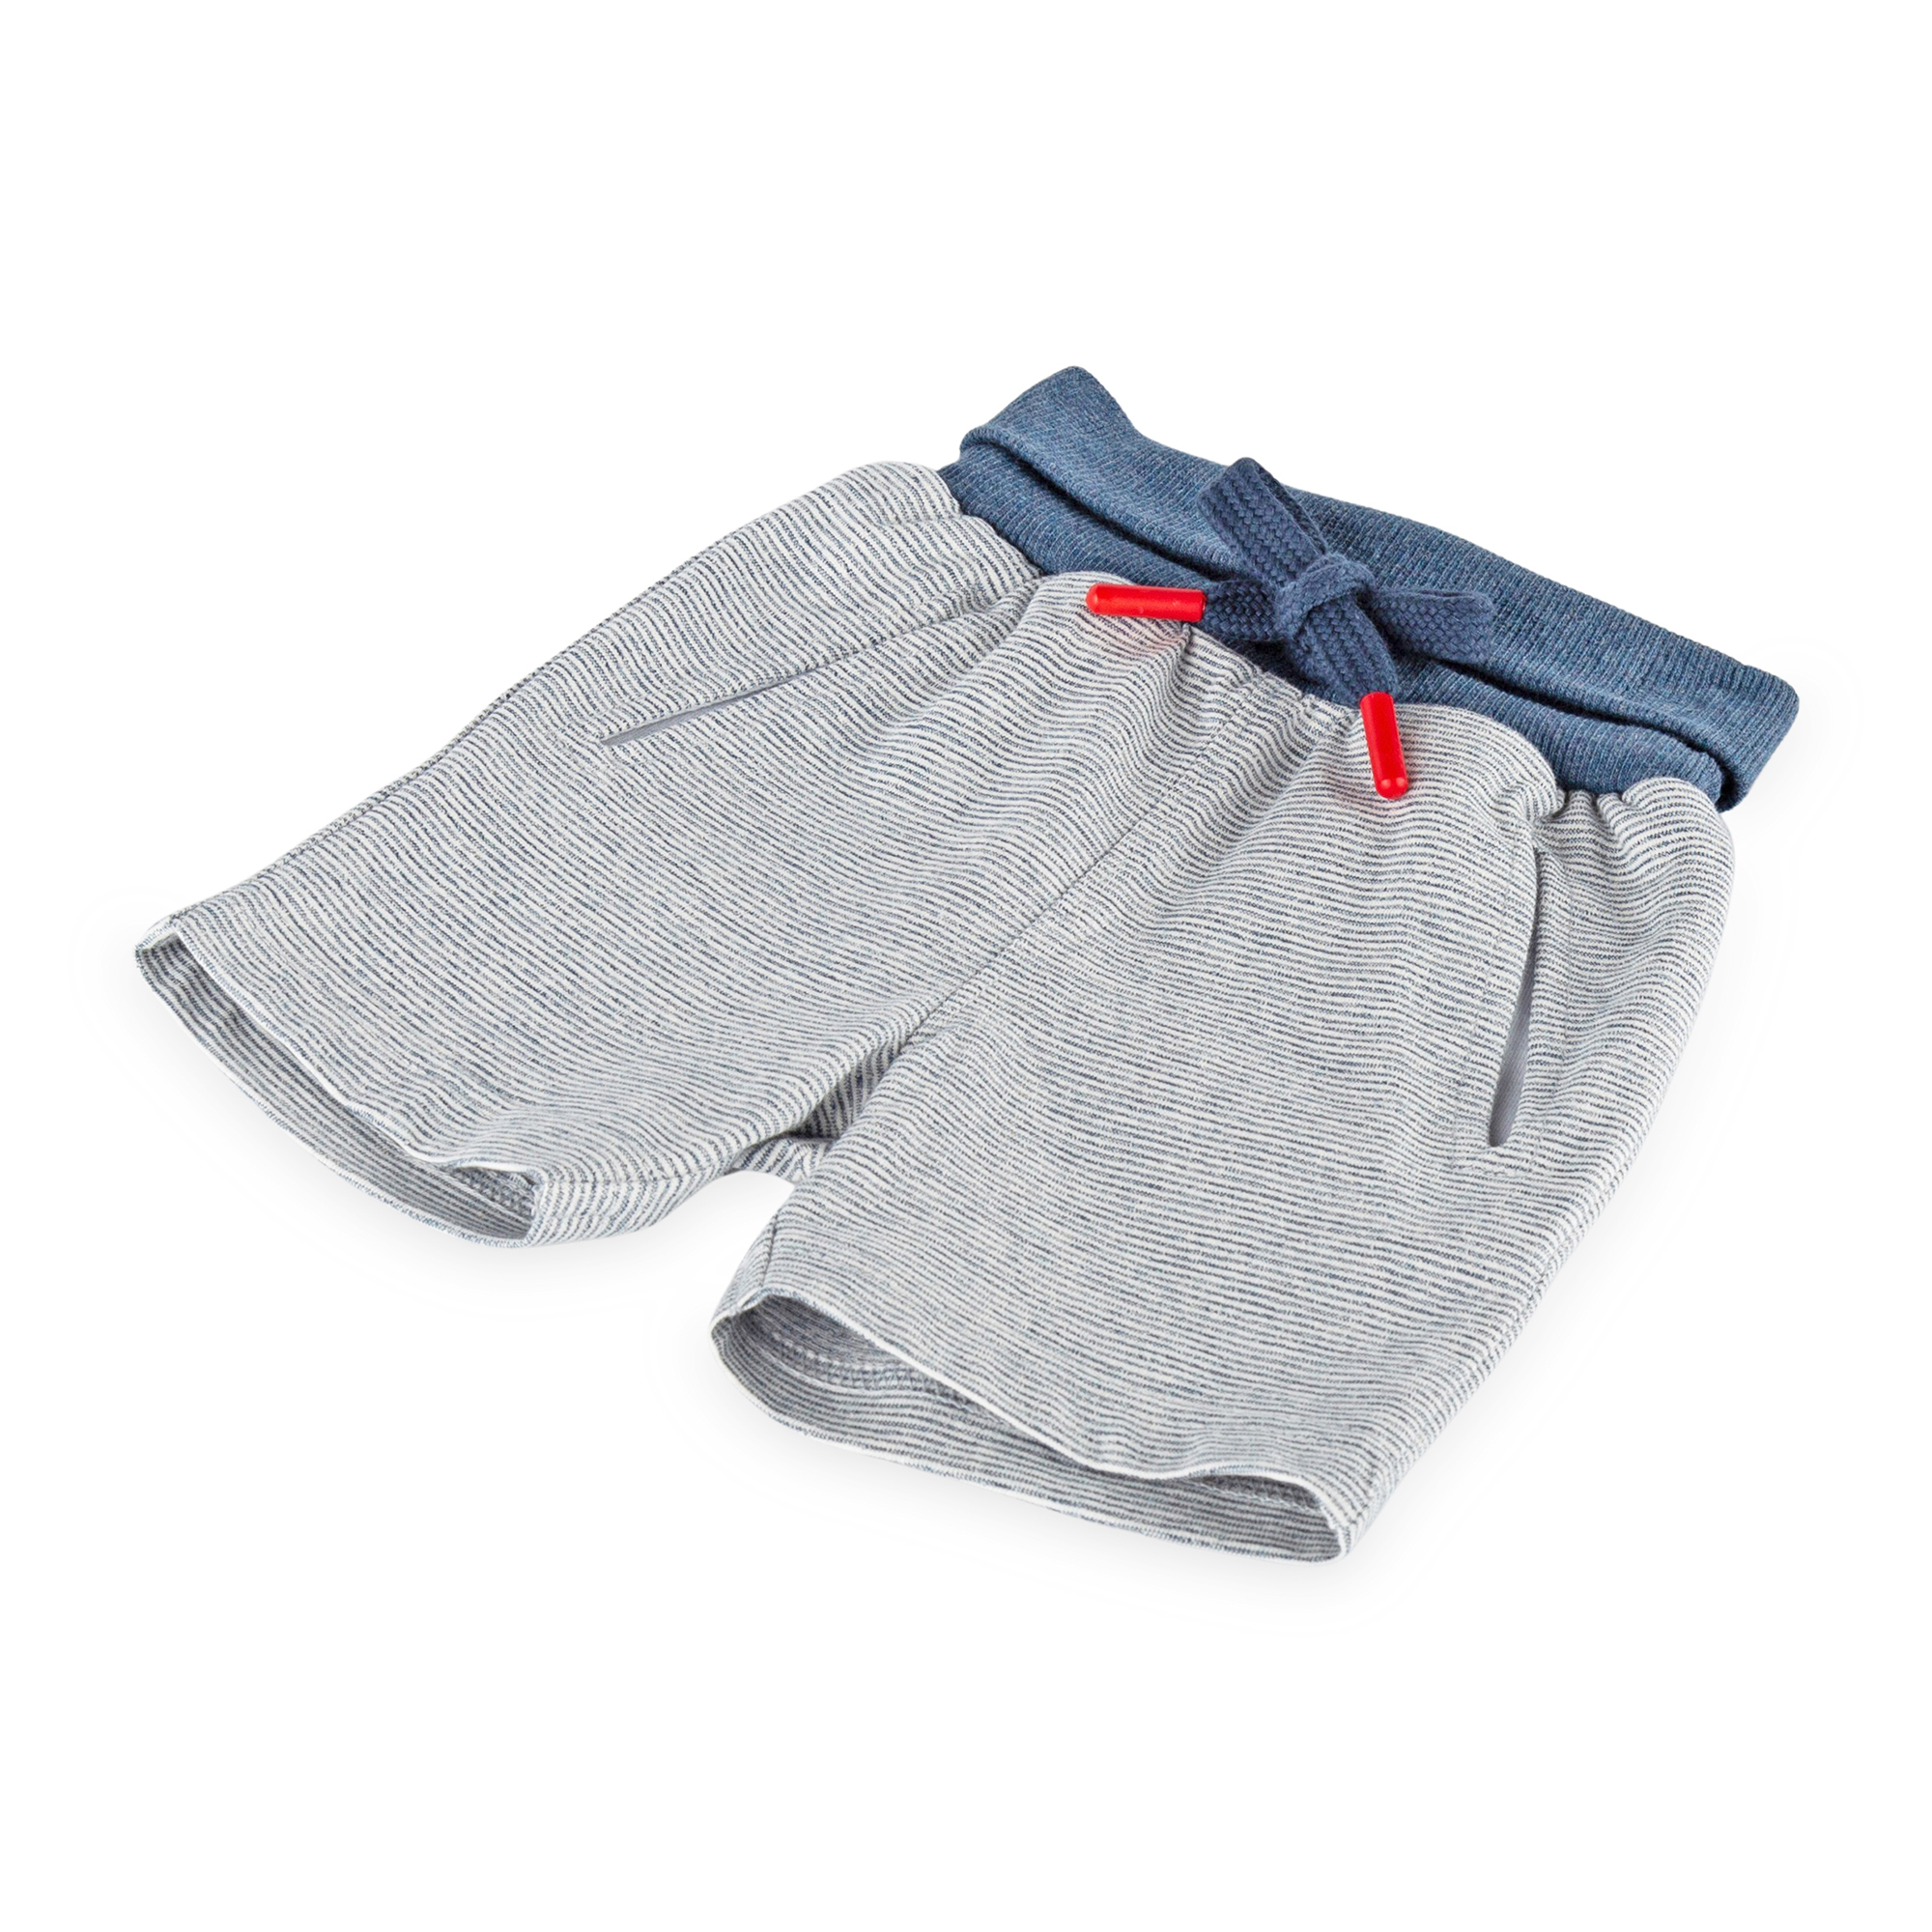 Super soft baby bermuda shorts with pockets